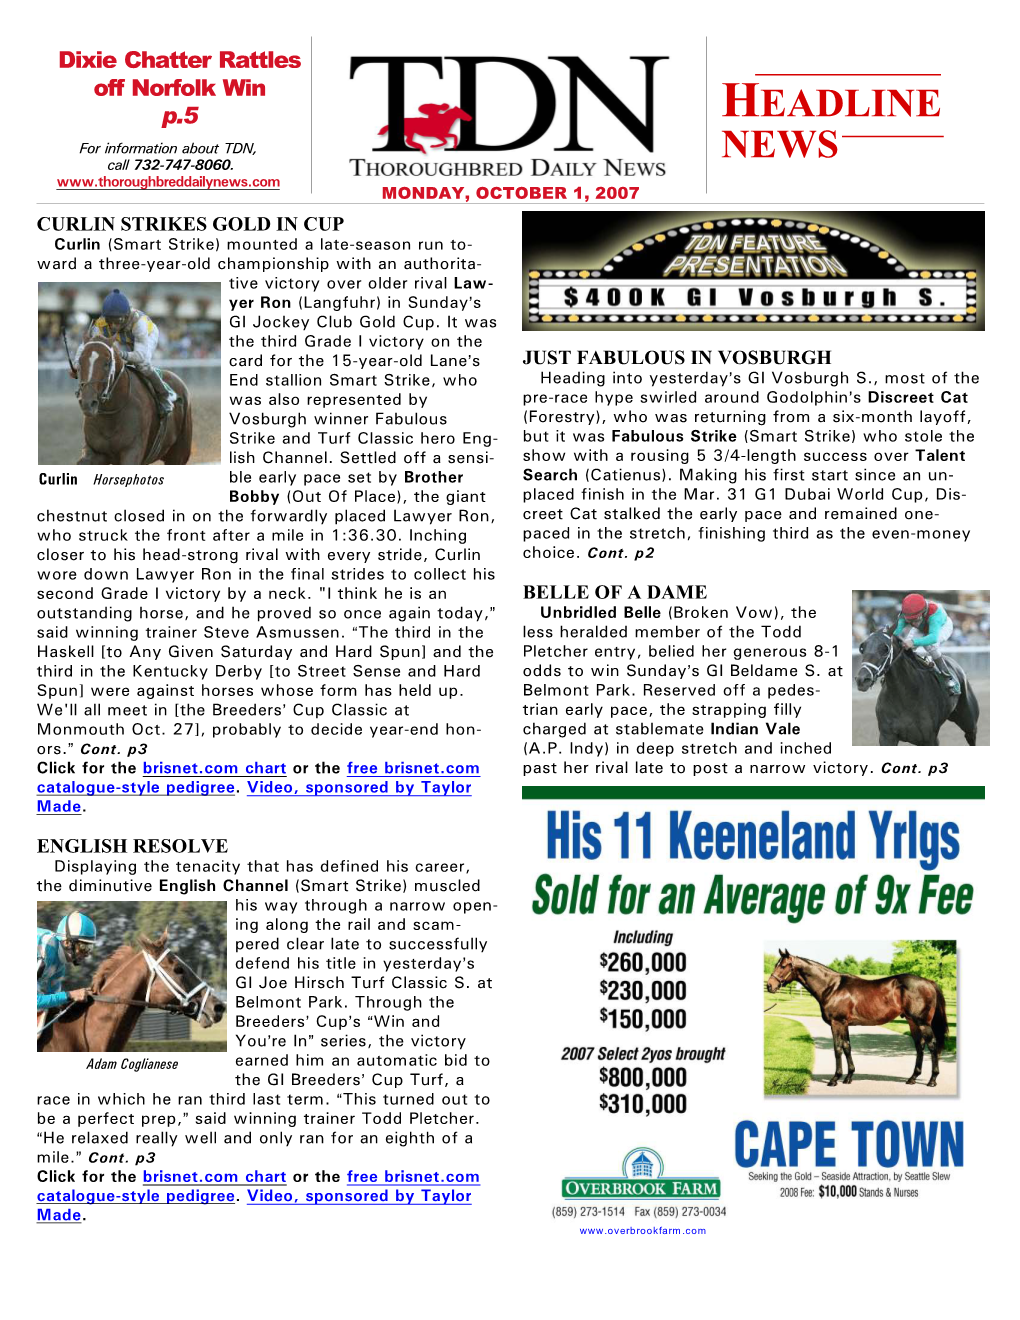 HEADLINE NEWS • 10/1/07 • PAGE 2 of 12